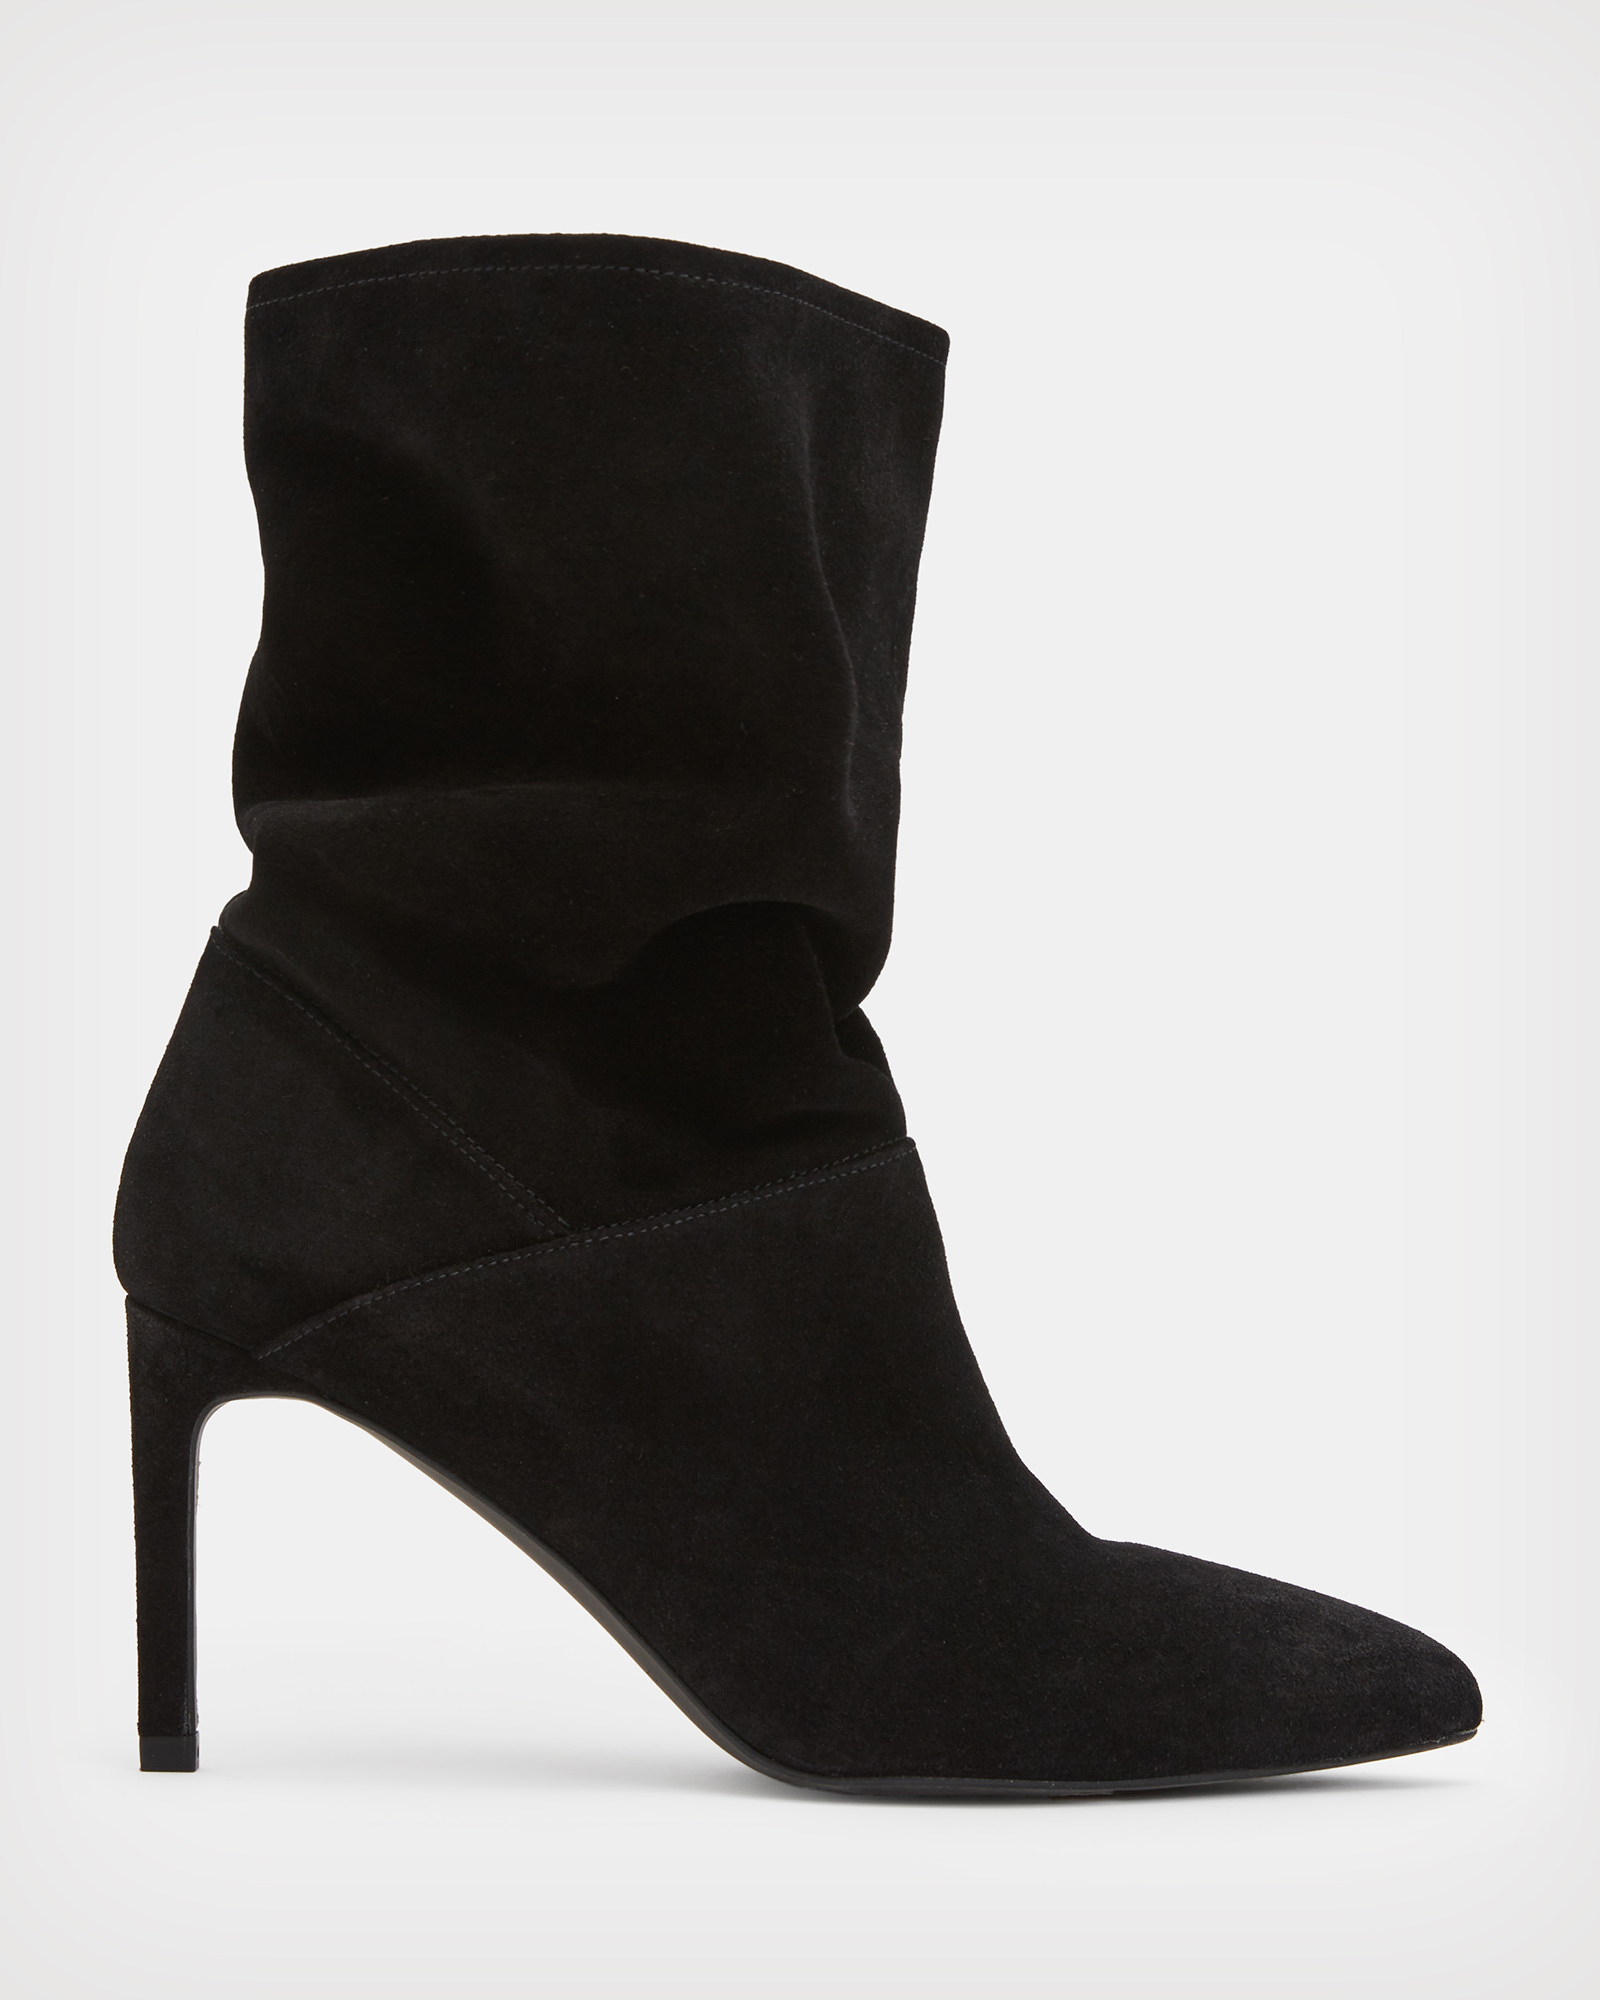 AllSaints Women's Suede Leather Orlana Boots, Black, Size: UK 3/US 6/EU 36